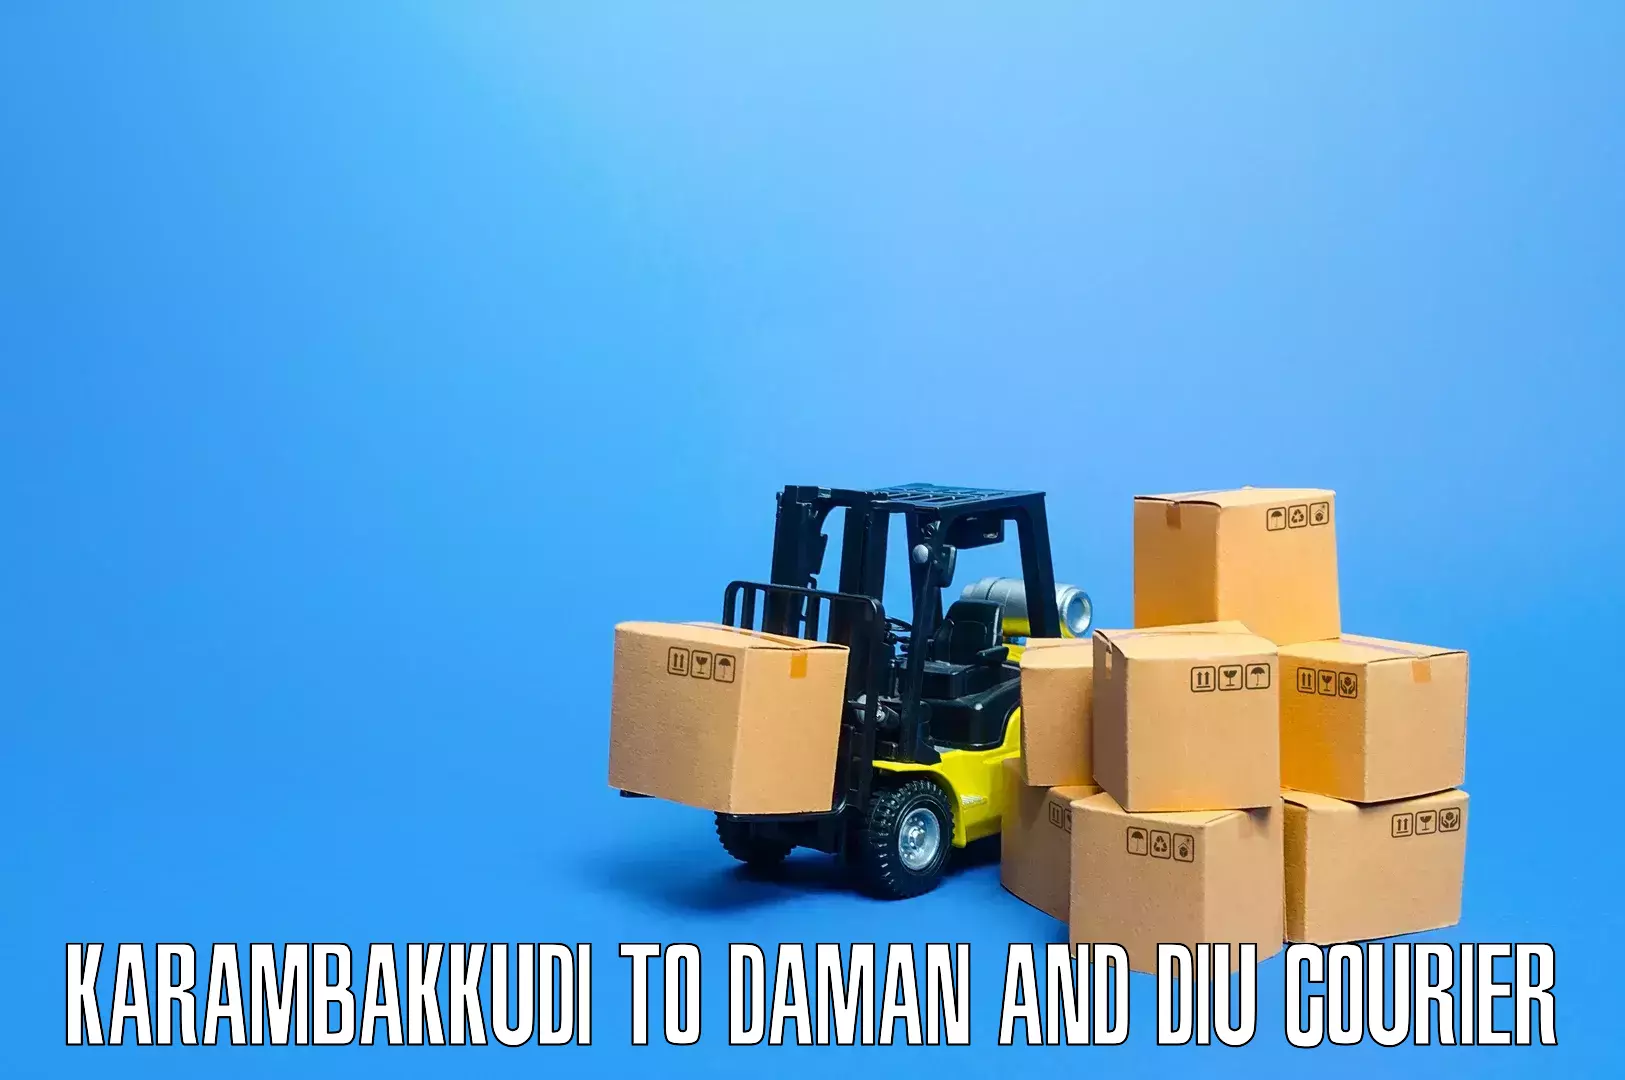 Quality moving and storage in Karambakkudi to Daman and Diu